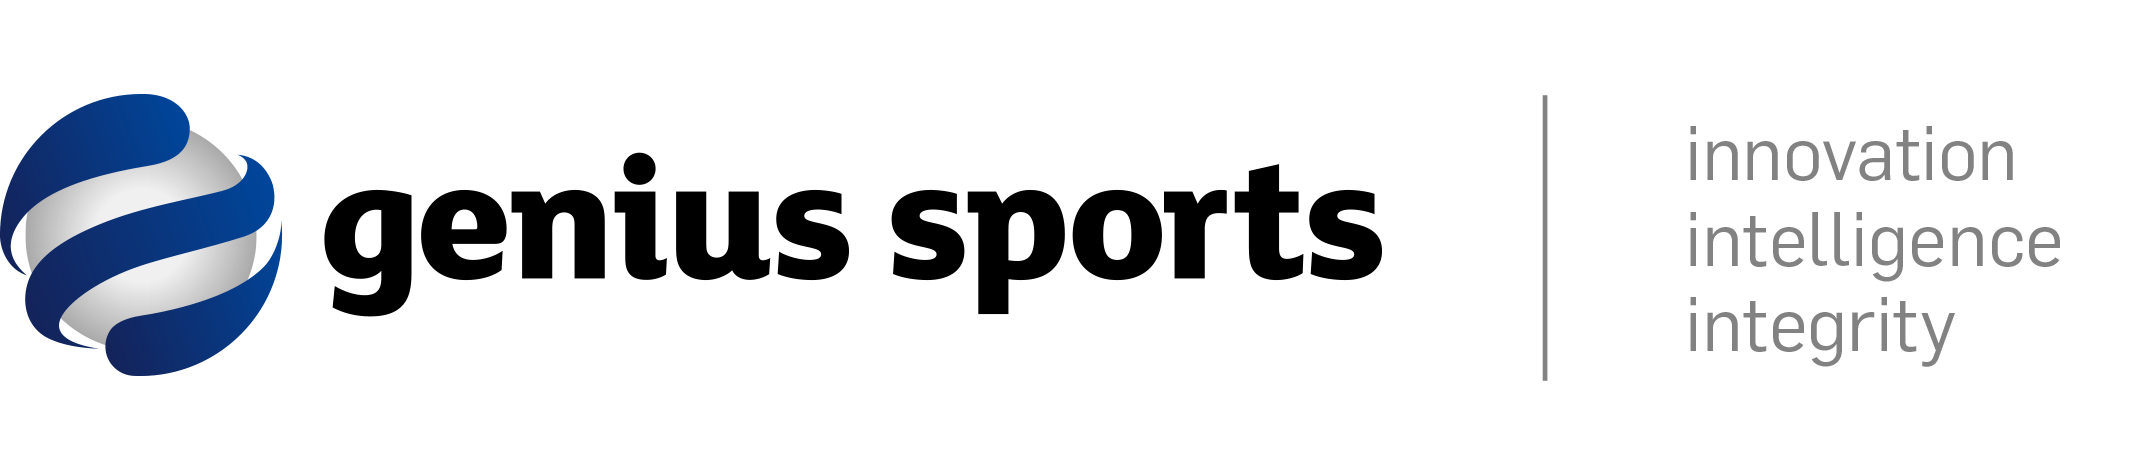 Genius Sports_logo 3 i's